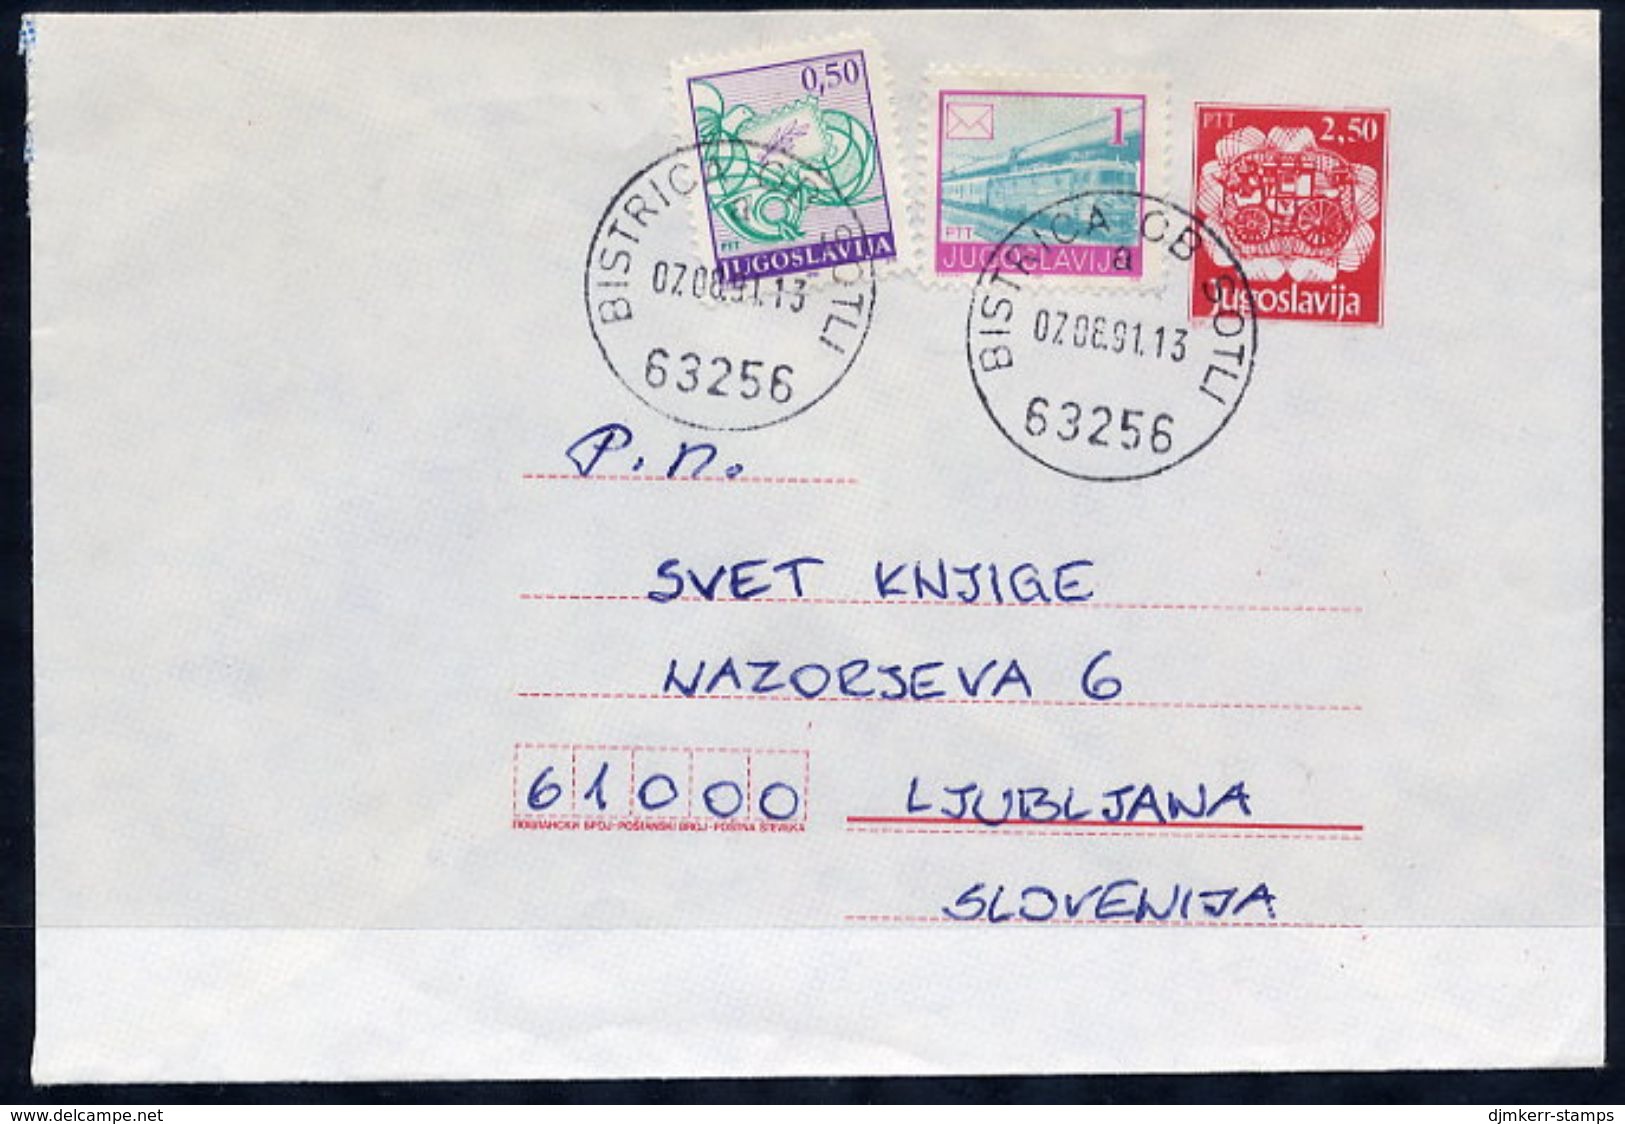 YUGOSLAVIA 1991 Mailcoach 2.50 D. Stationery Envelope Used With Additional Franking.  Michel U97 - Interi Postali